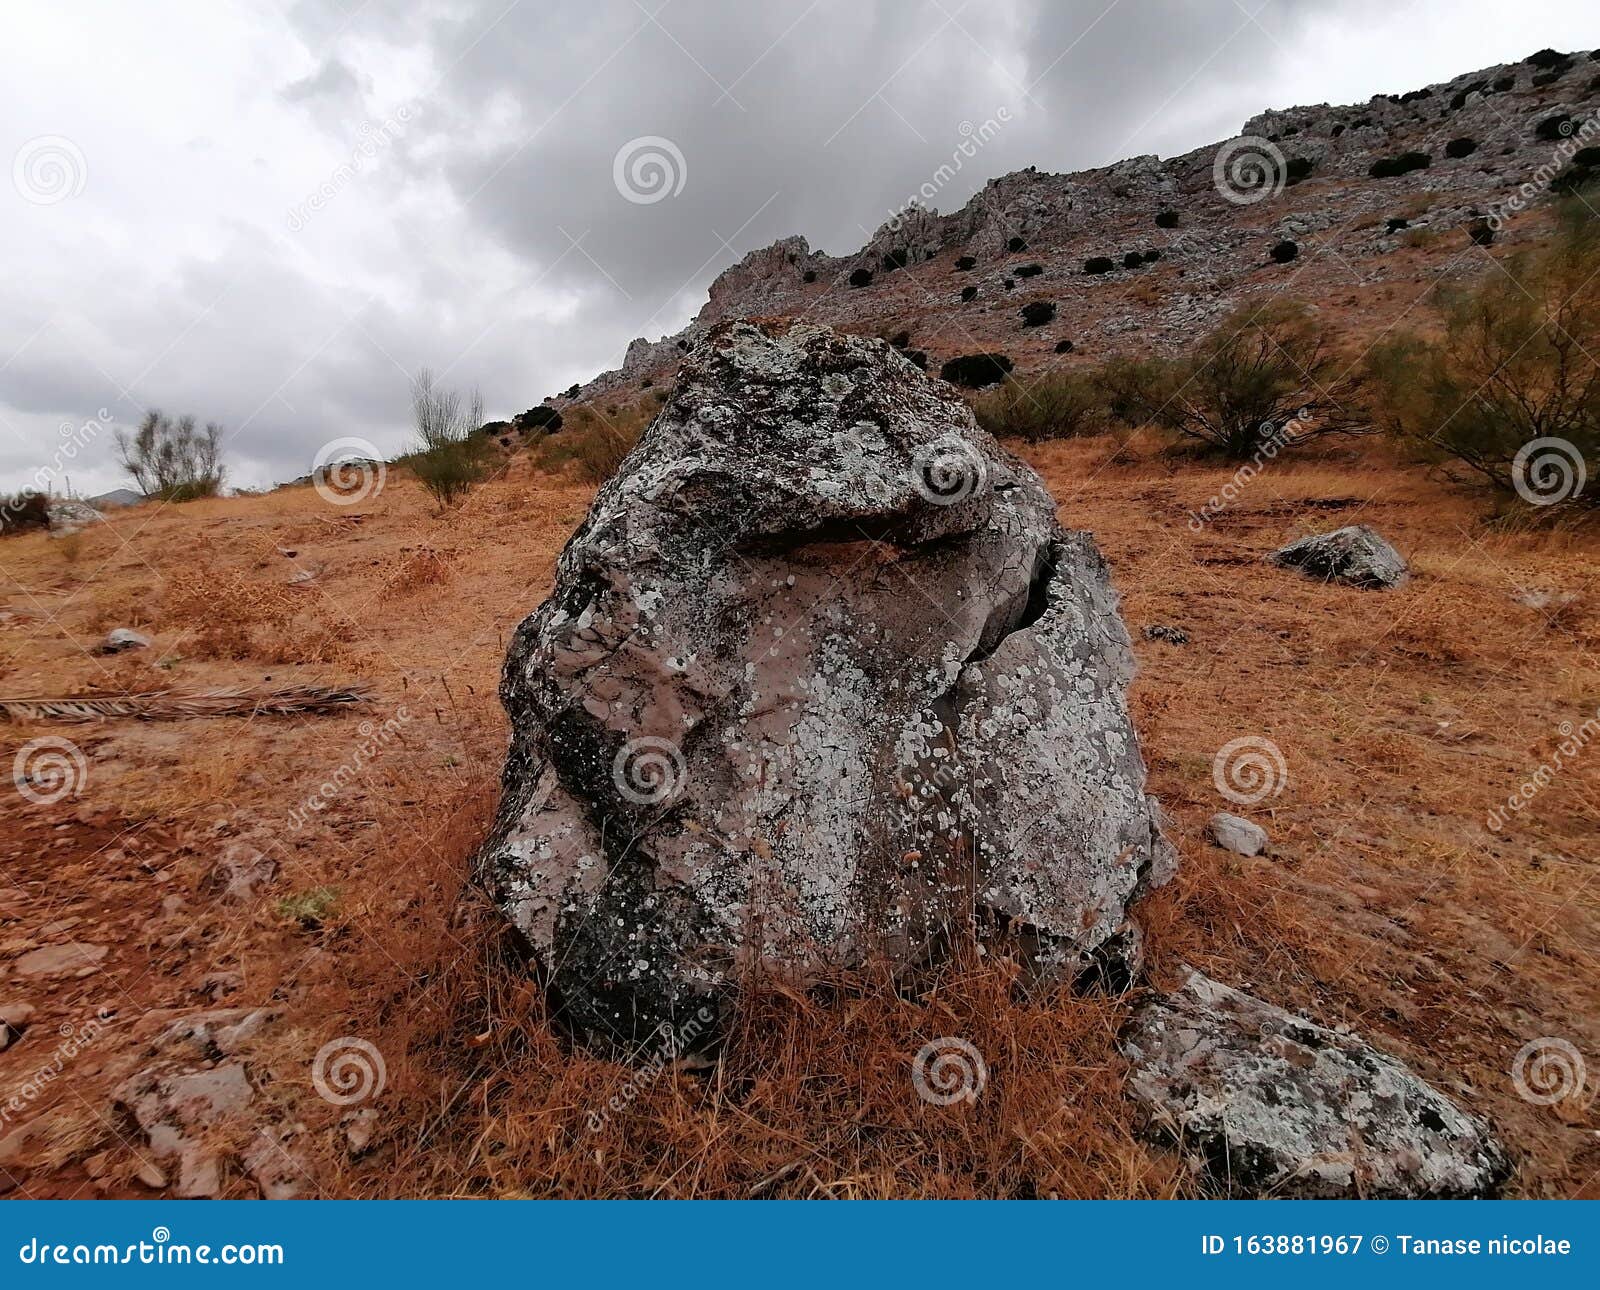 close-up big stone mountain background.